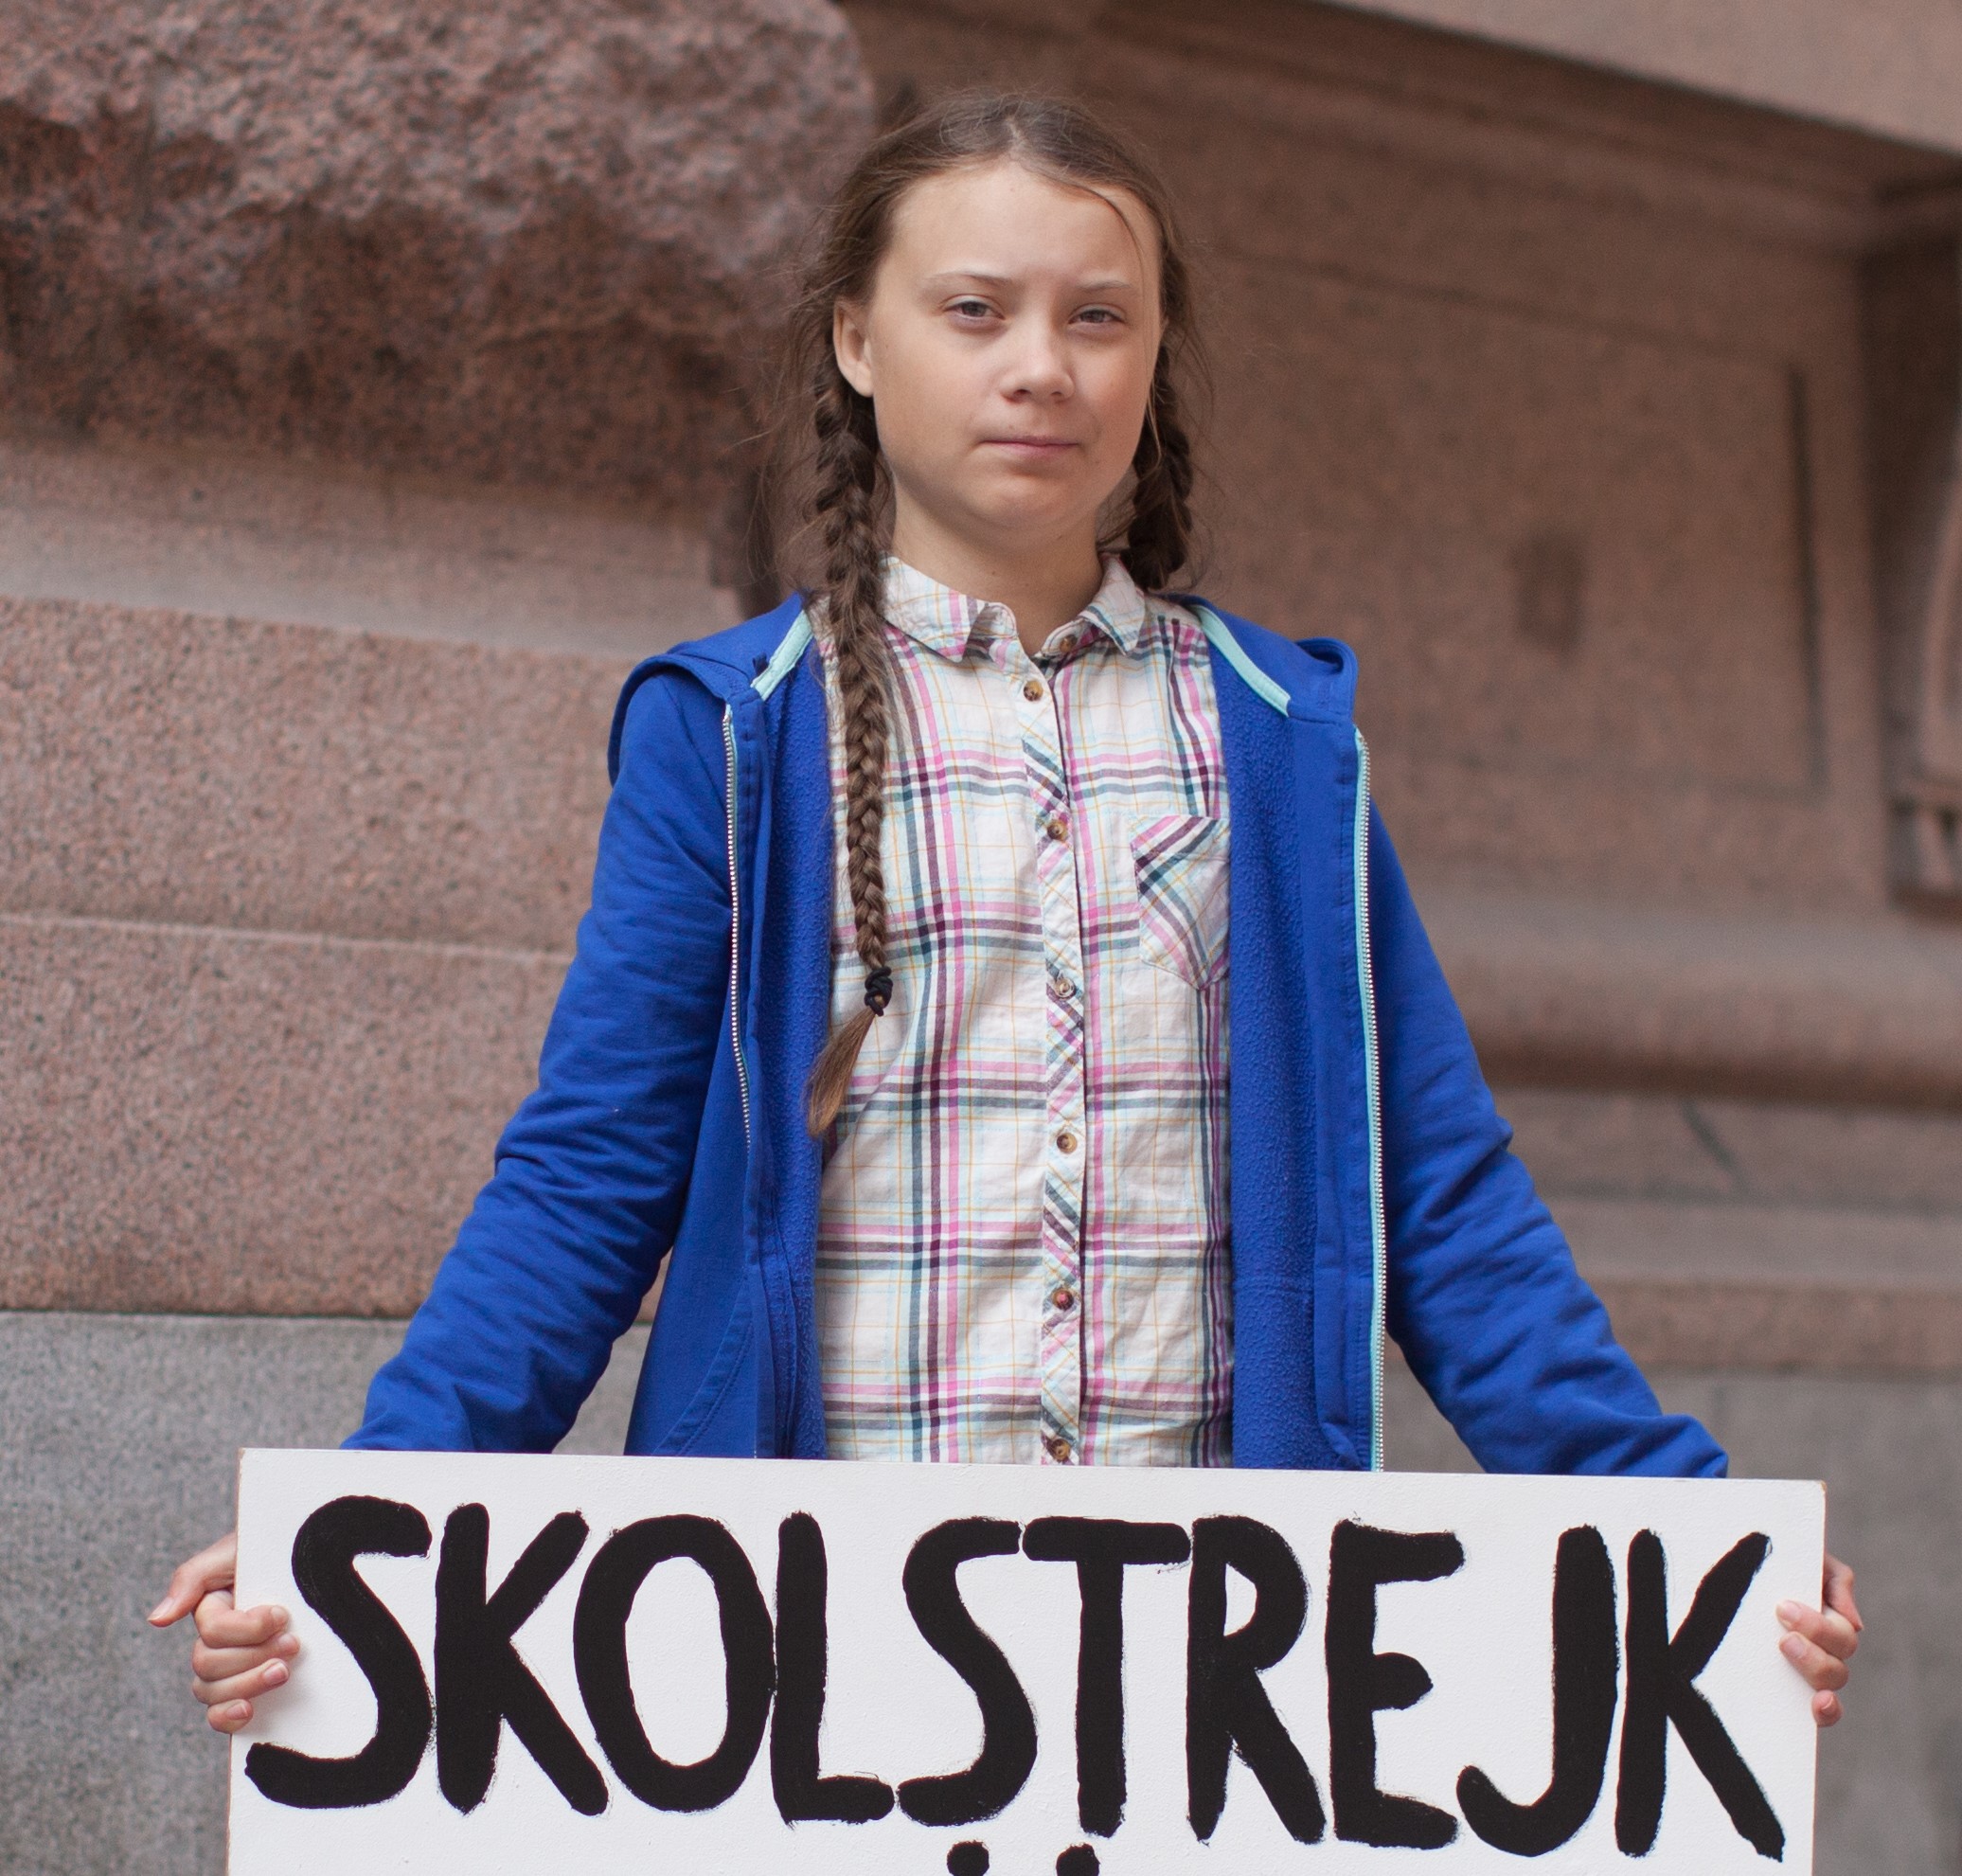 Greta Thunberg holding her original sign saying 'Skolstrejk för klimatet' [School strike for the climate].